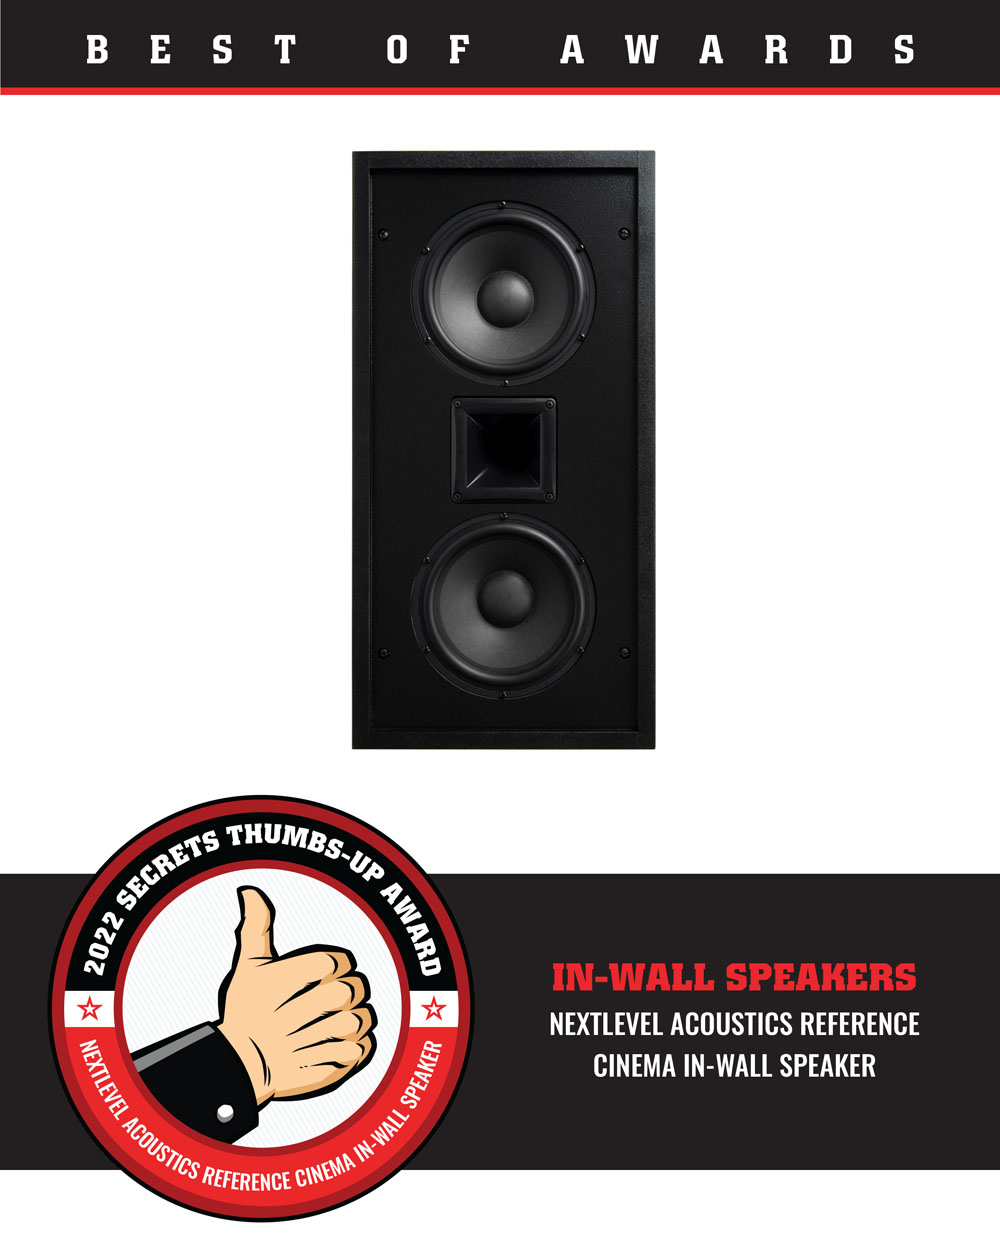 NextLevel Acoustics Reference Cinema In-Wall Speaker Best of 2022 Award